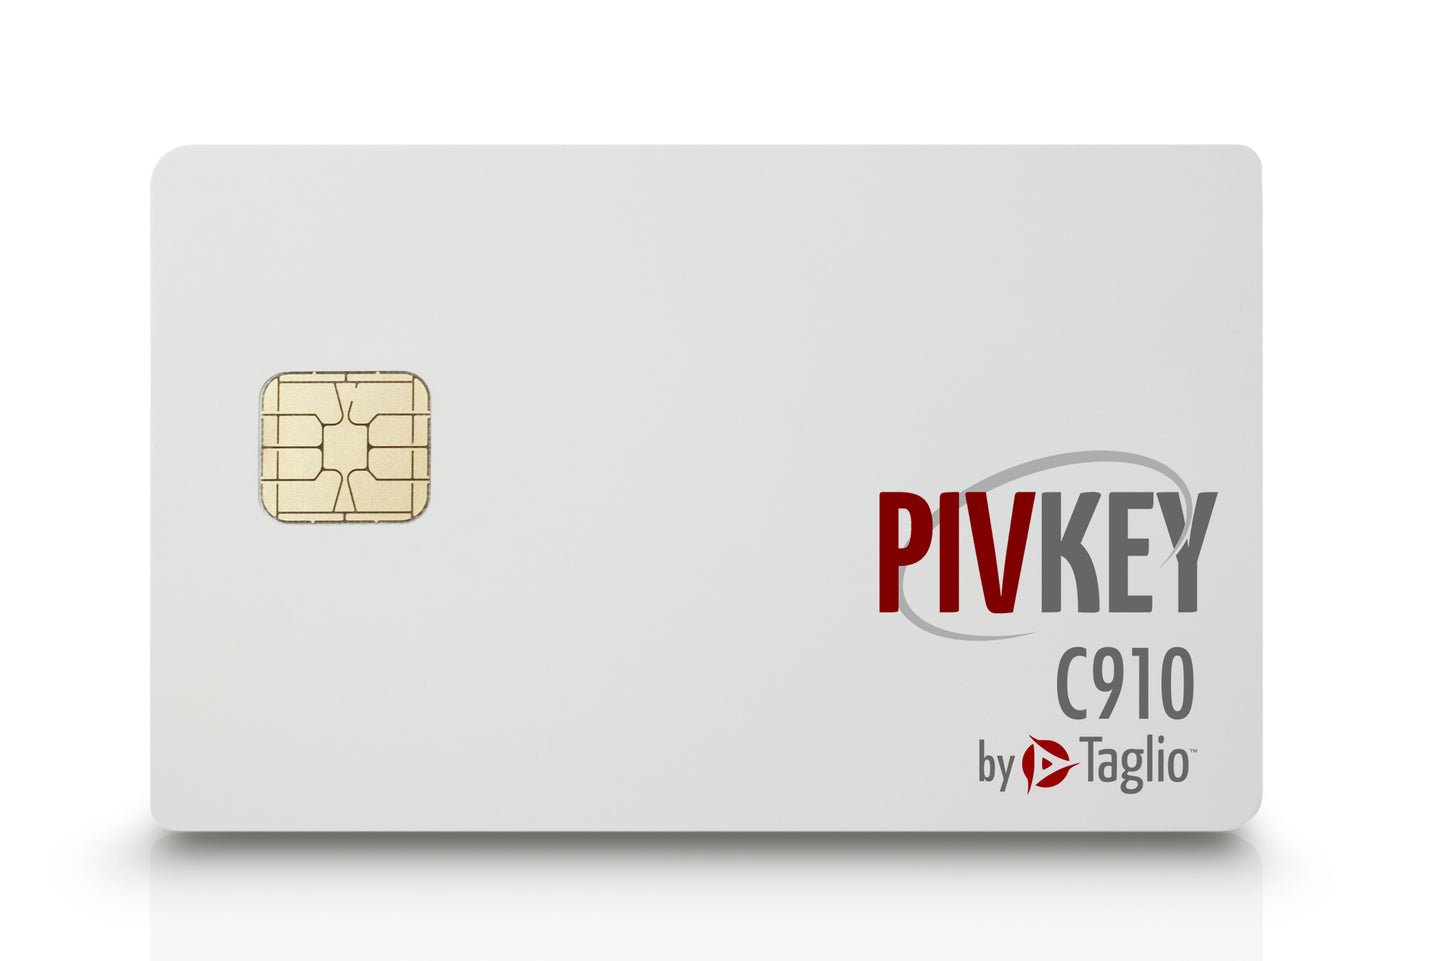 PIVKey C910 Dual (Contact/Contactless) PKI Smart Card